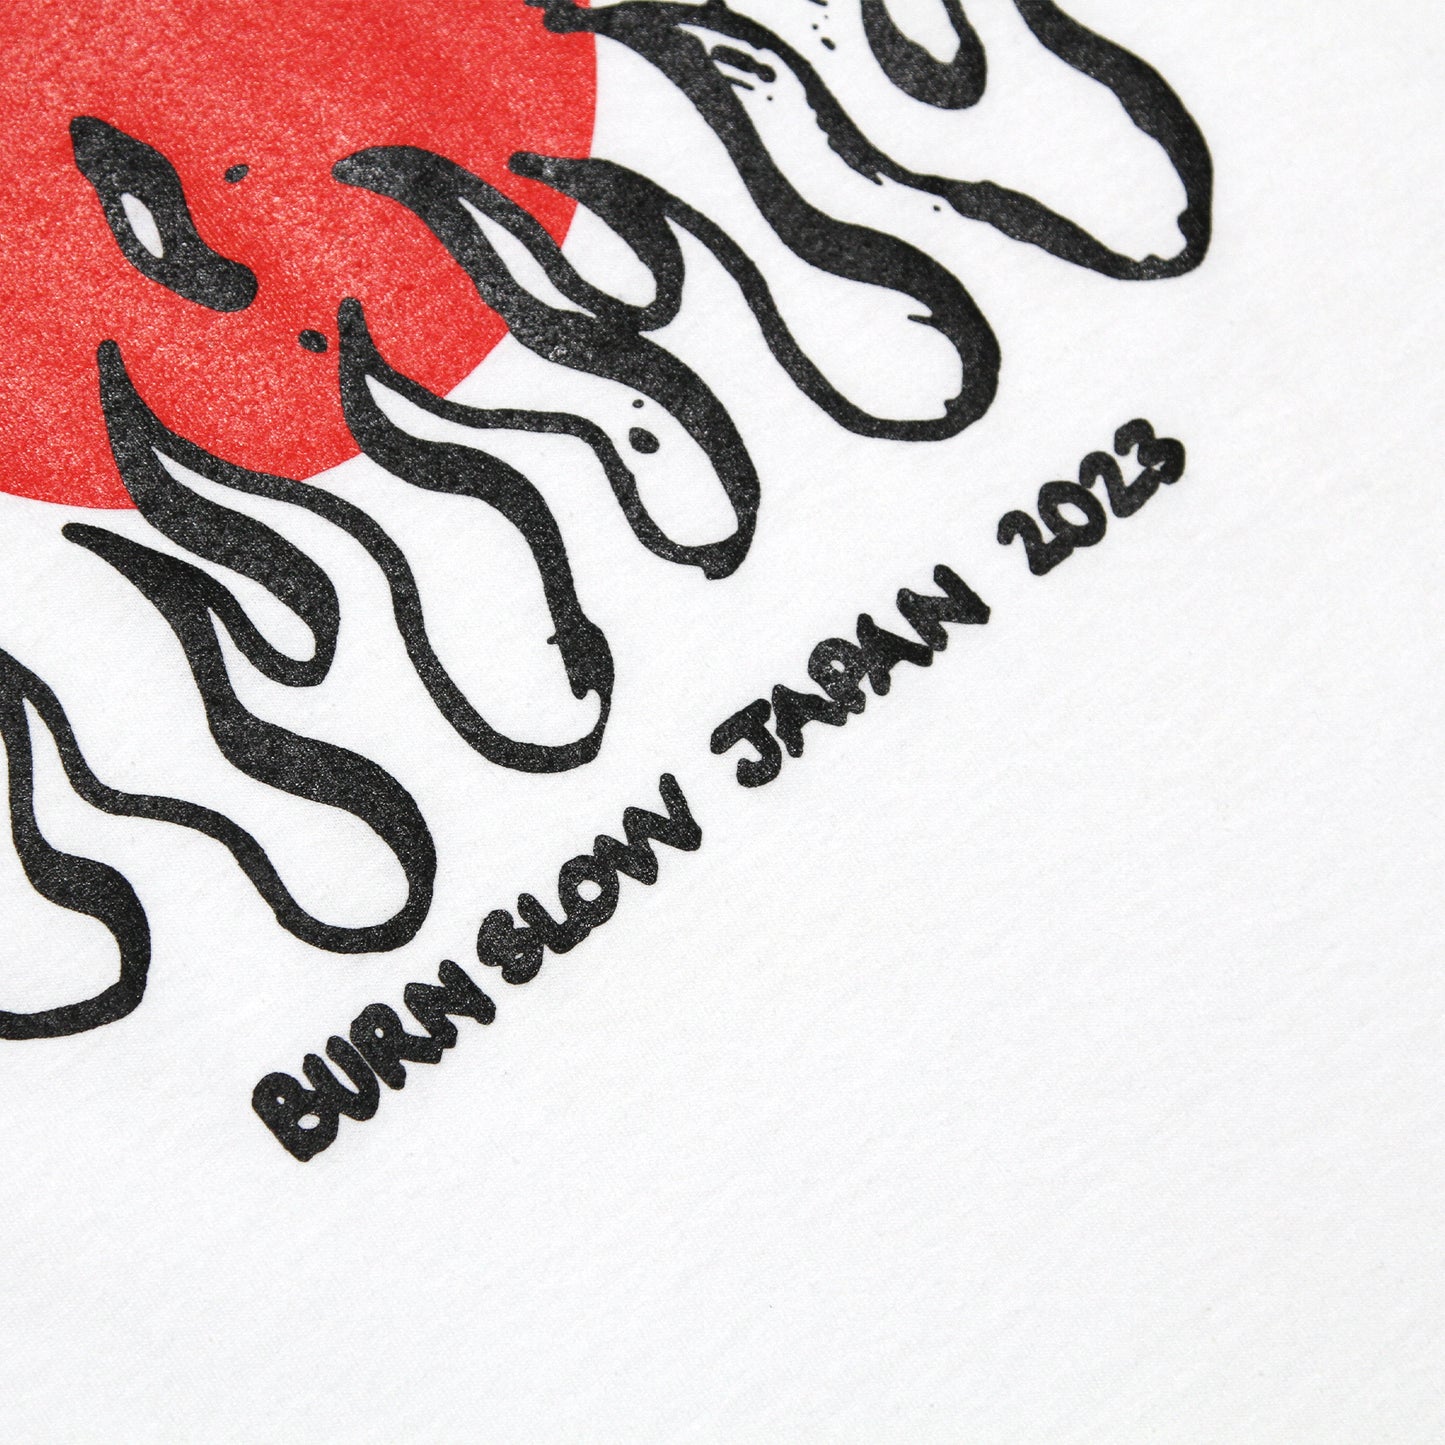 MOTO-BUNKA X BURN SLOW - I Love Japan Long Sleeve T-Shirt/White